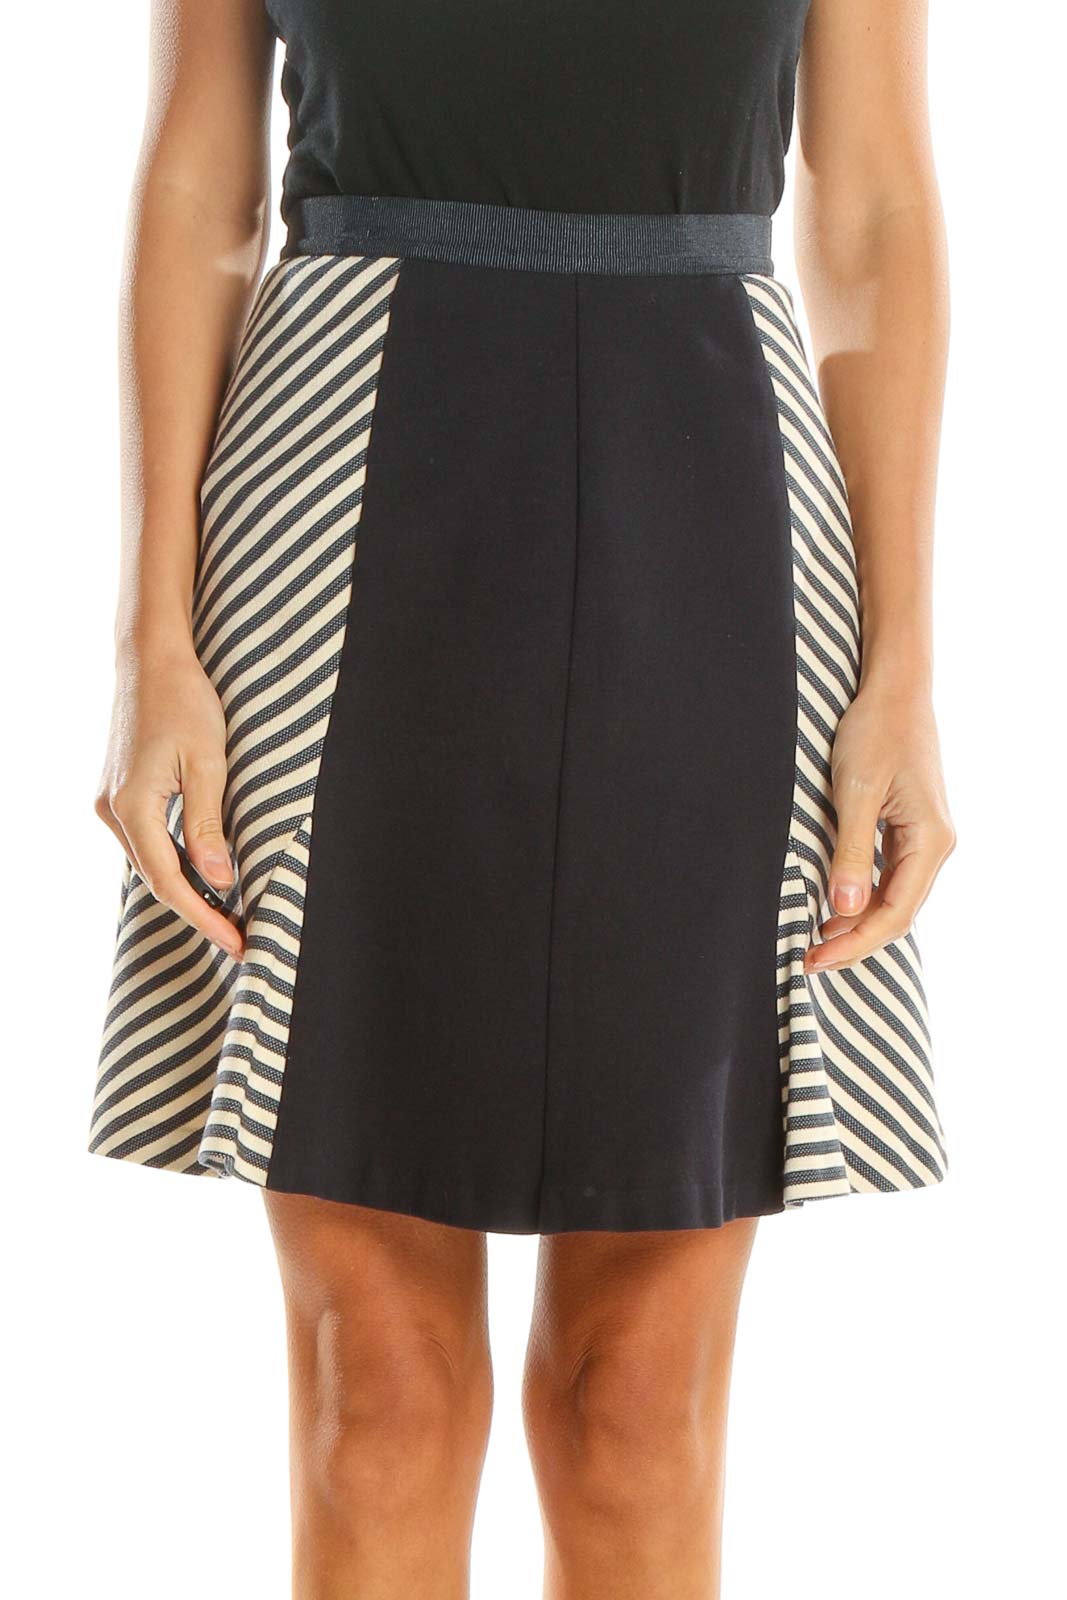 Blue Cream Colorblock Striped Retro A-Line Skirt Front